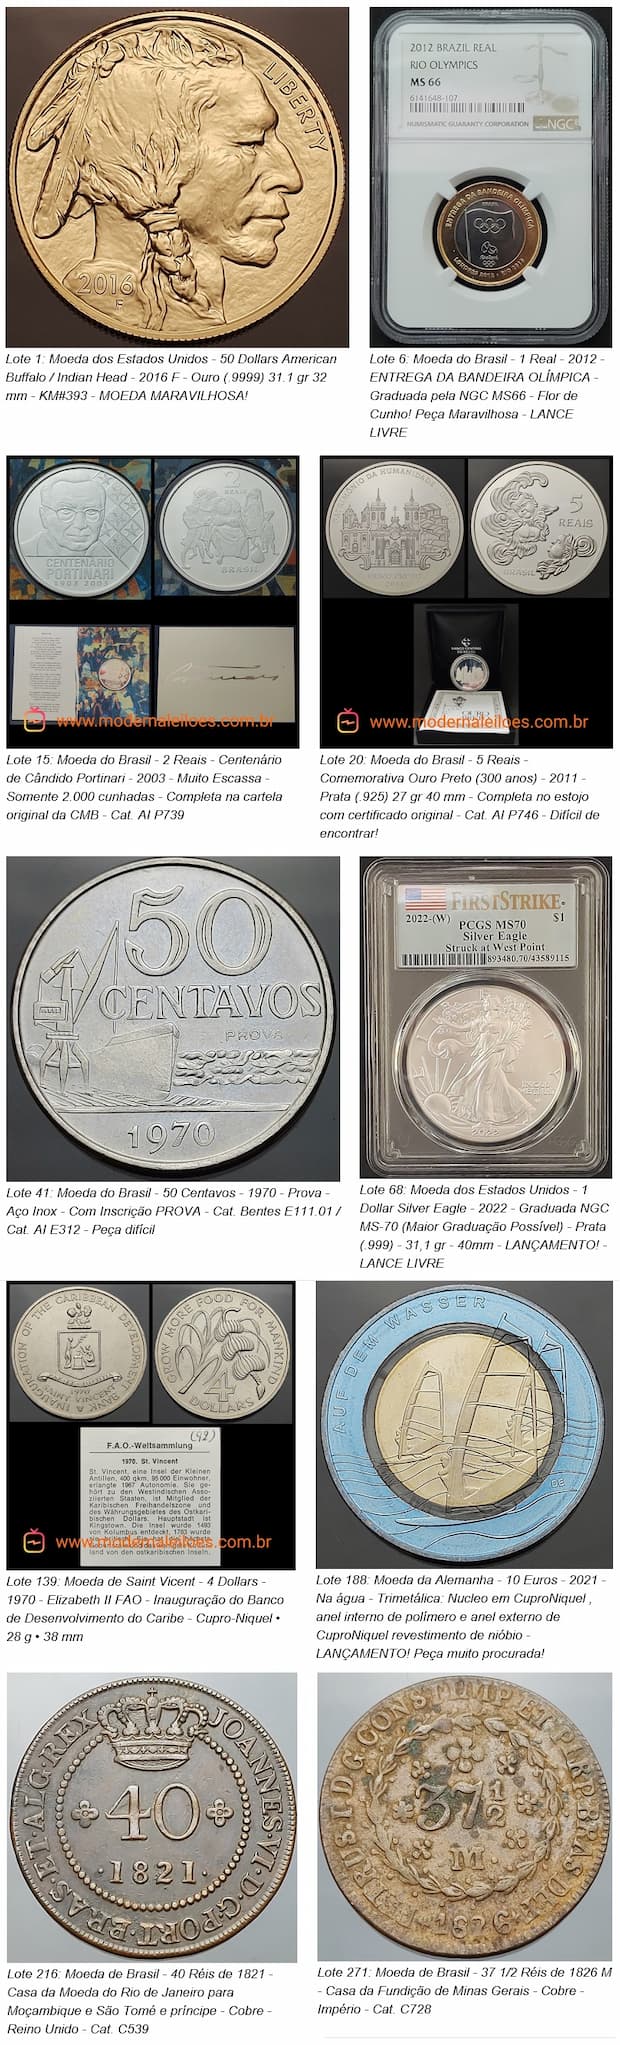 Flávia Cardoso Soares Auktionen: 50º Moderne numismatische Auktion - 31-05 um 19:00, Highlights. Bekanntgabe.